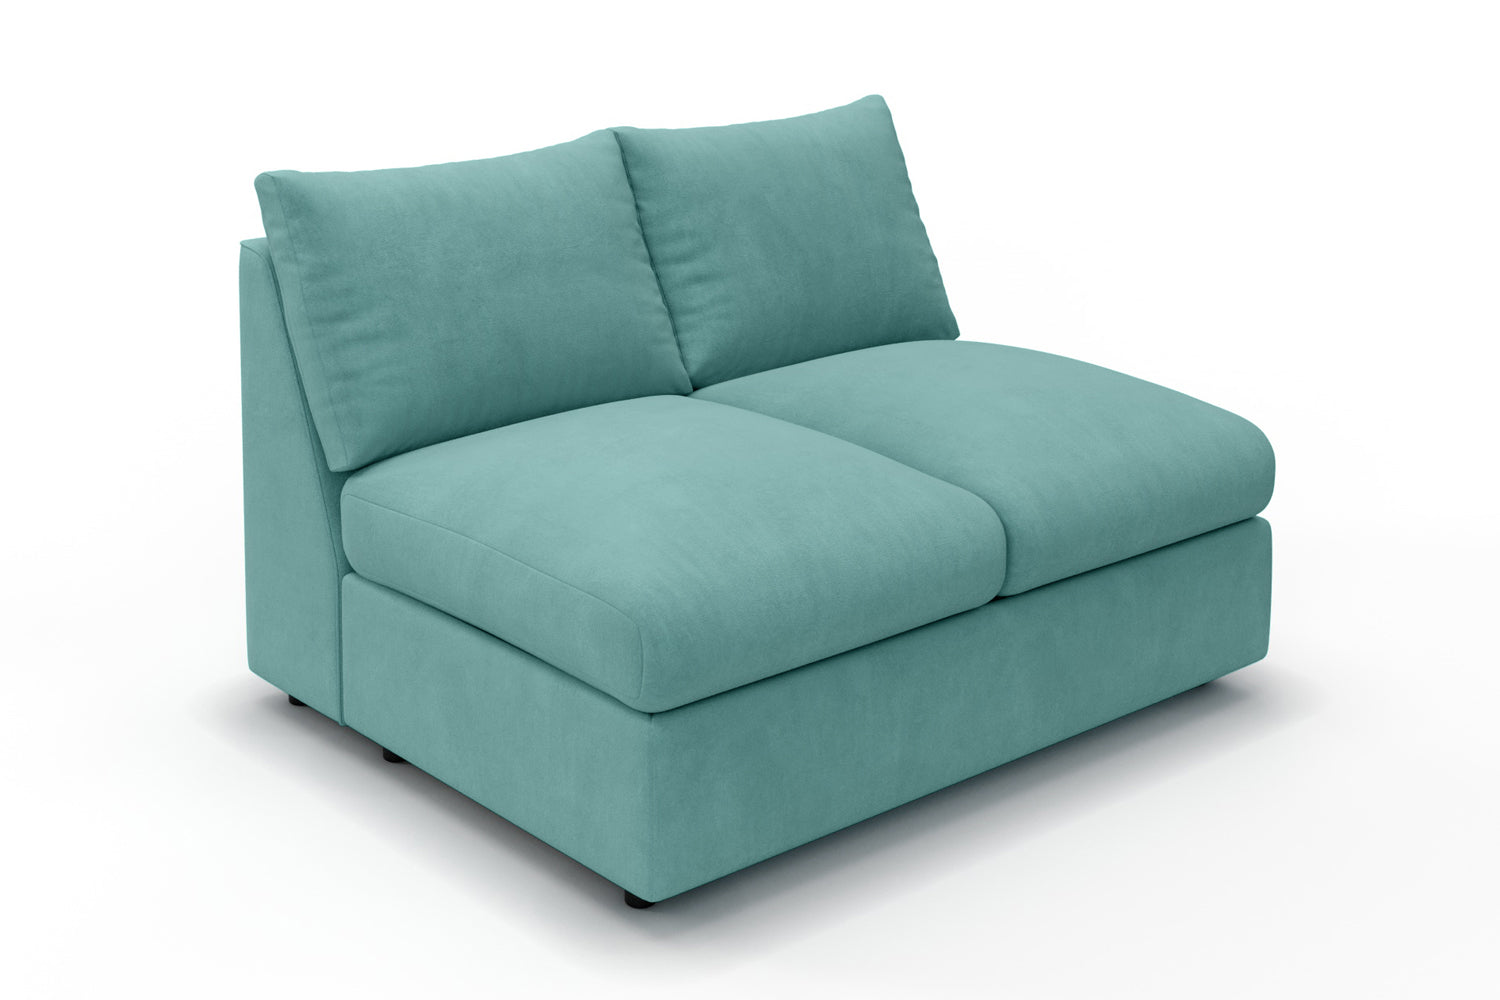 SNUG | The Cloud Sundae 2 Seater Sofa in Soft Teal